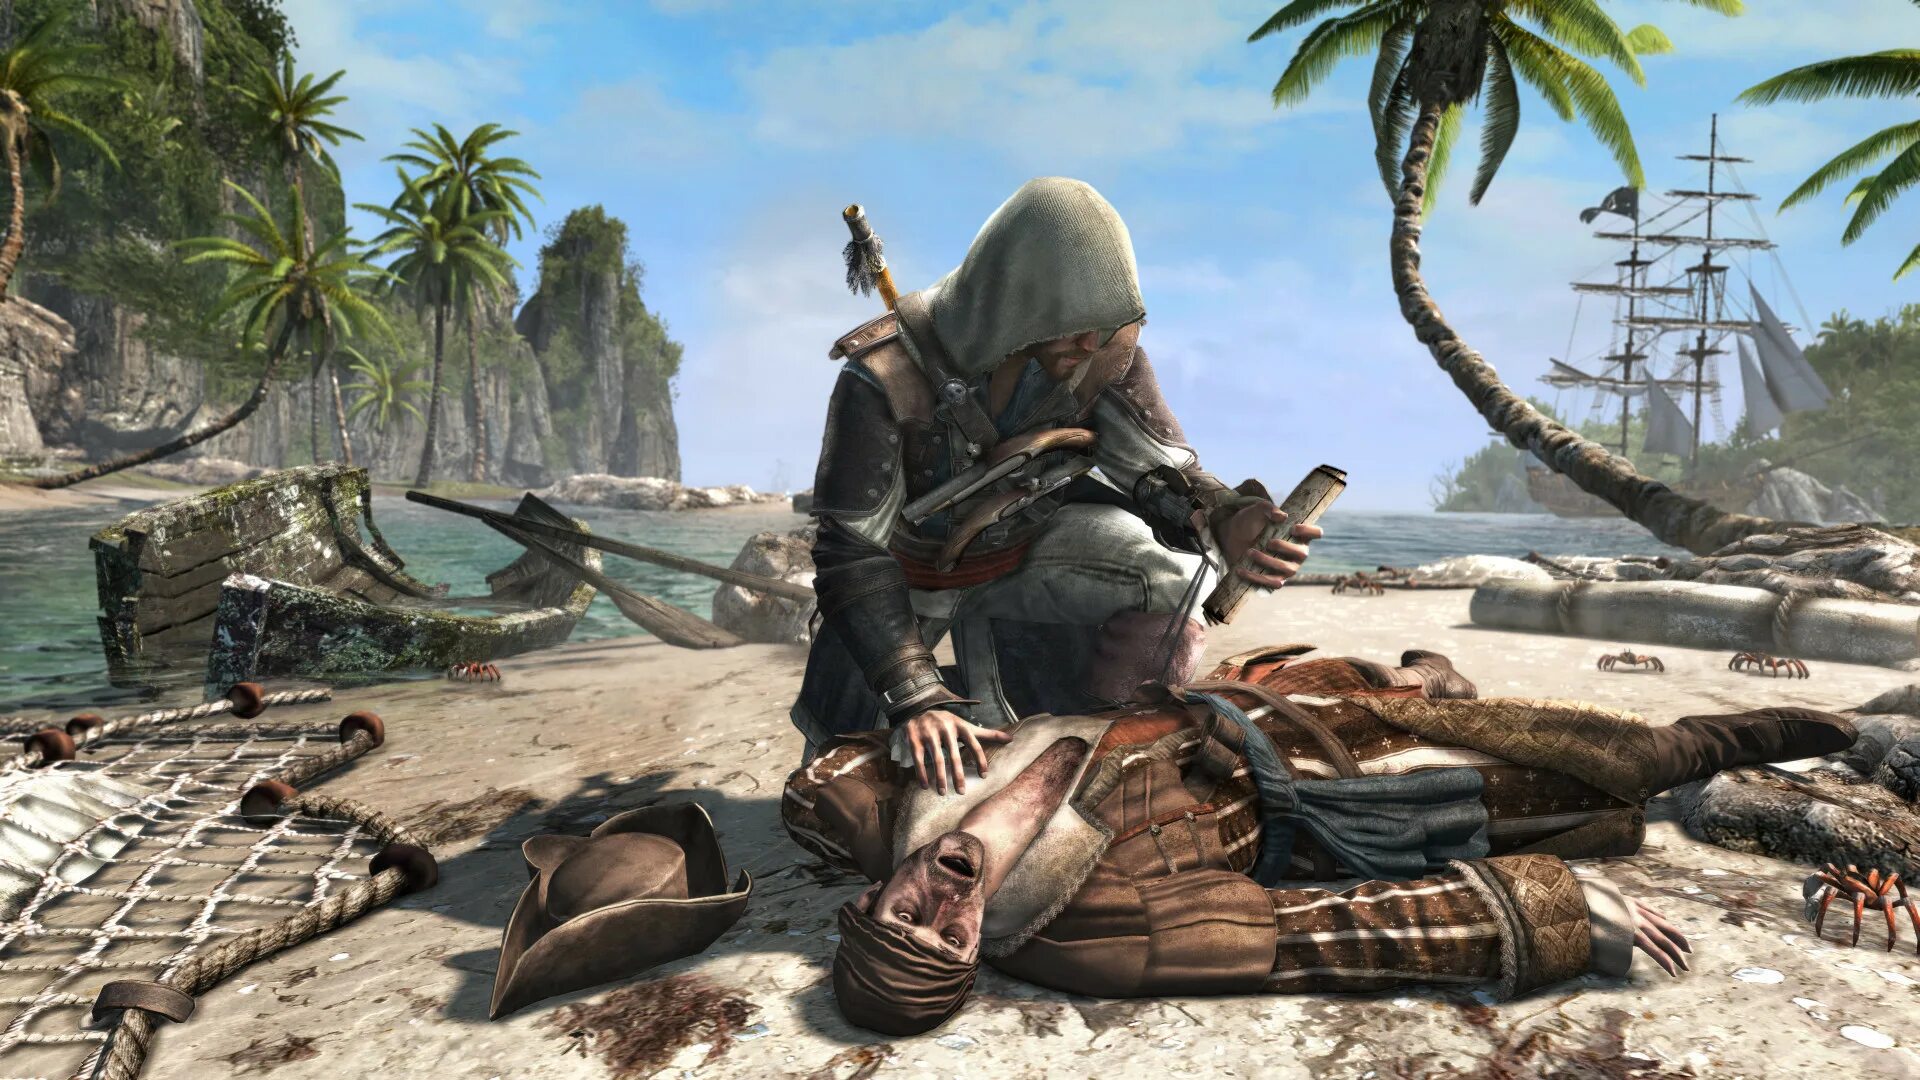 Ассасин Крид 4. Assassin's Creed 4 Black Flag геймплей. Гавана ассасин Крид 4. Ассасин Крид 4 Блэк флаг.